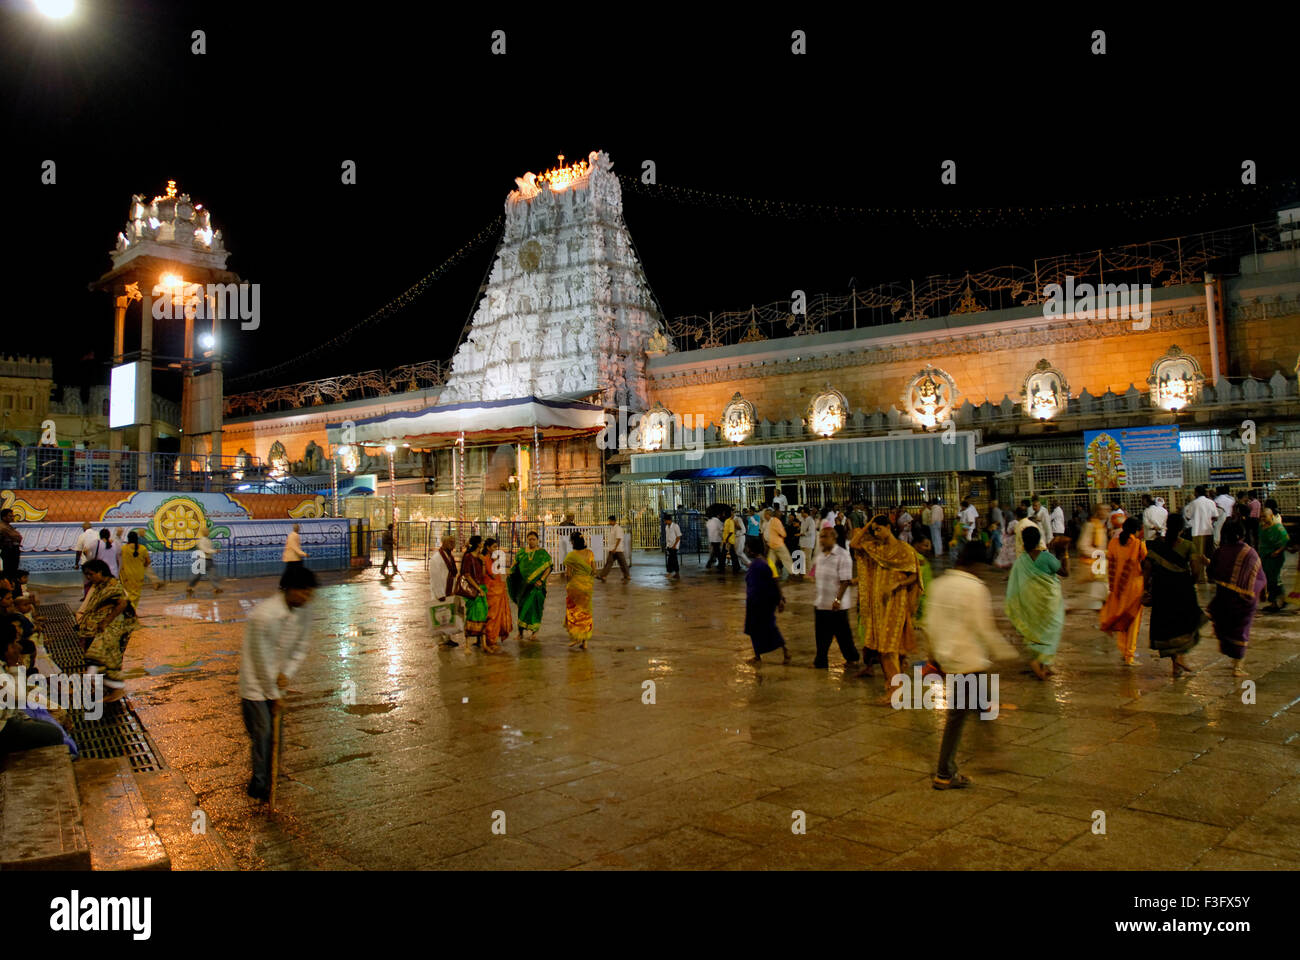 Signore illuminato Tempio Venkateshvara Balaji Tirumala Tirupati Andhra Pradesh in India Foto Stock